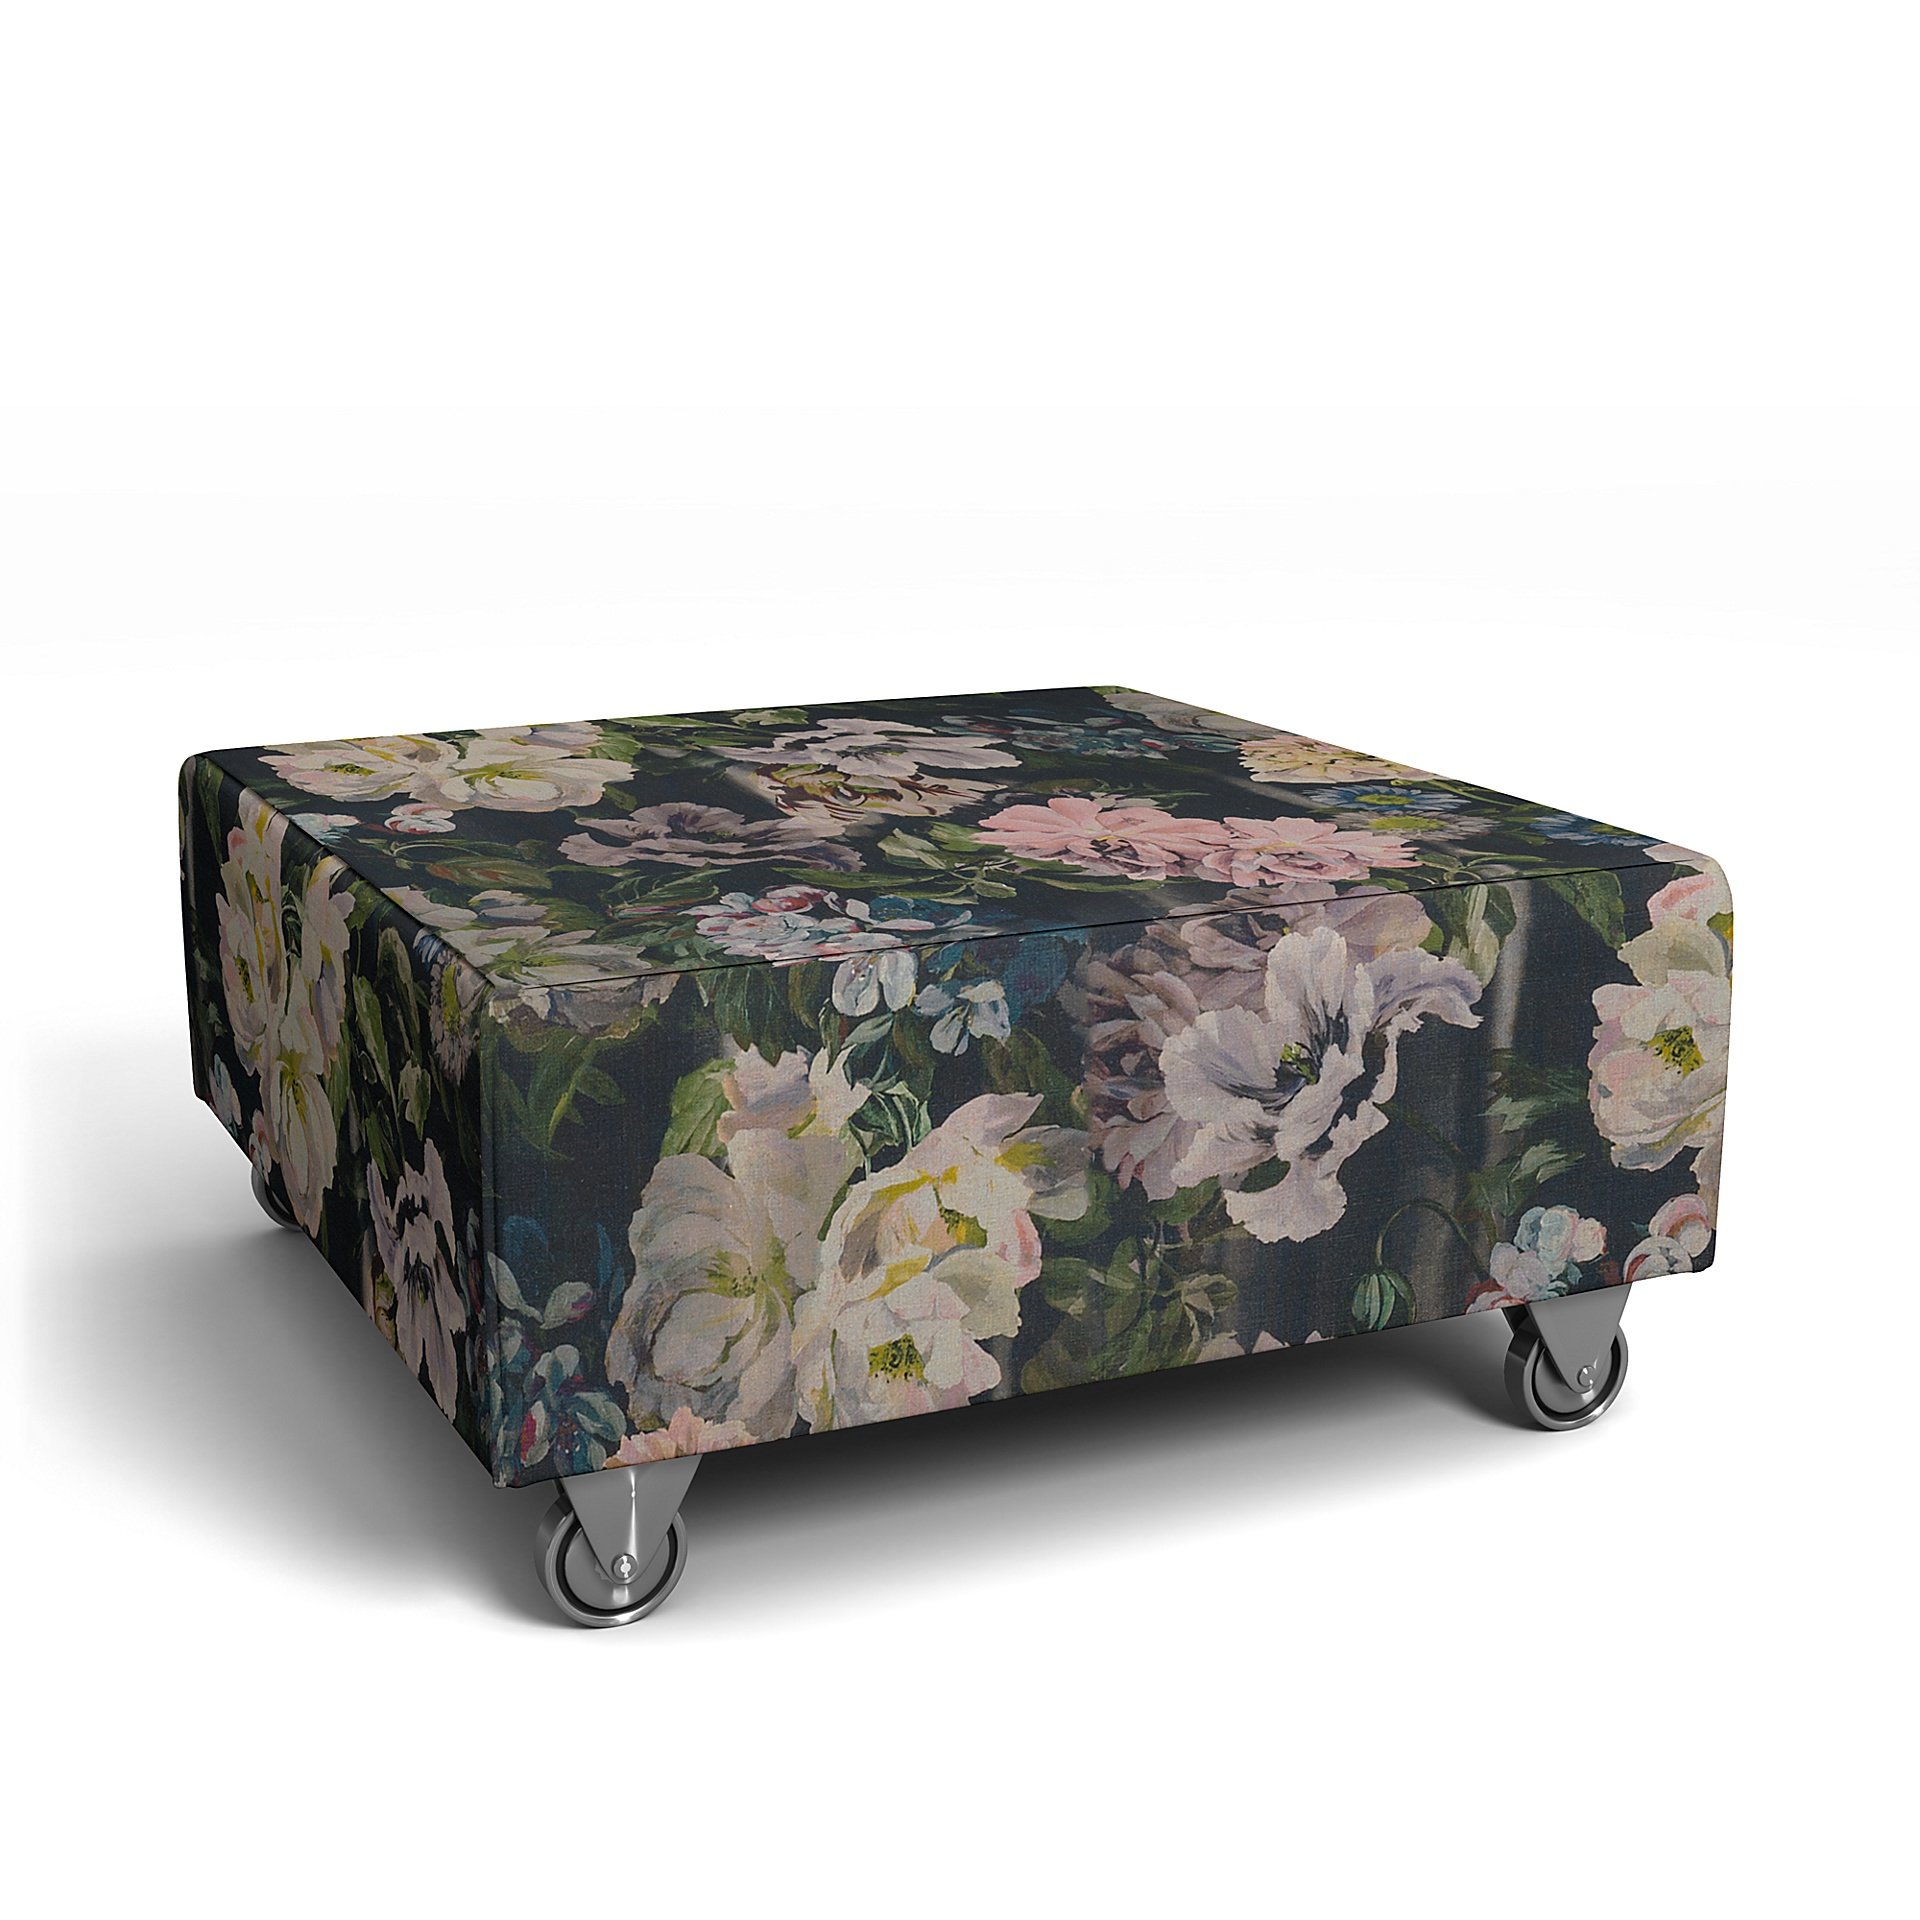 IKEA - Falsterbo Footstool Cover, Delft Flower - Graphite, Linen - Bemz